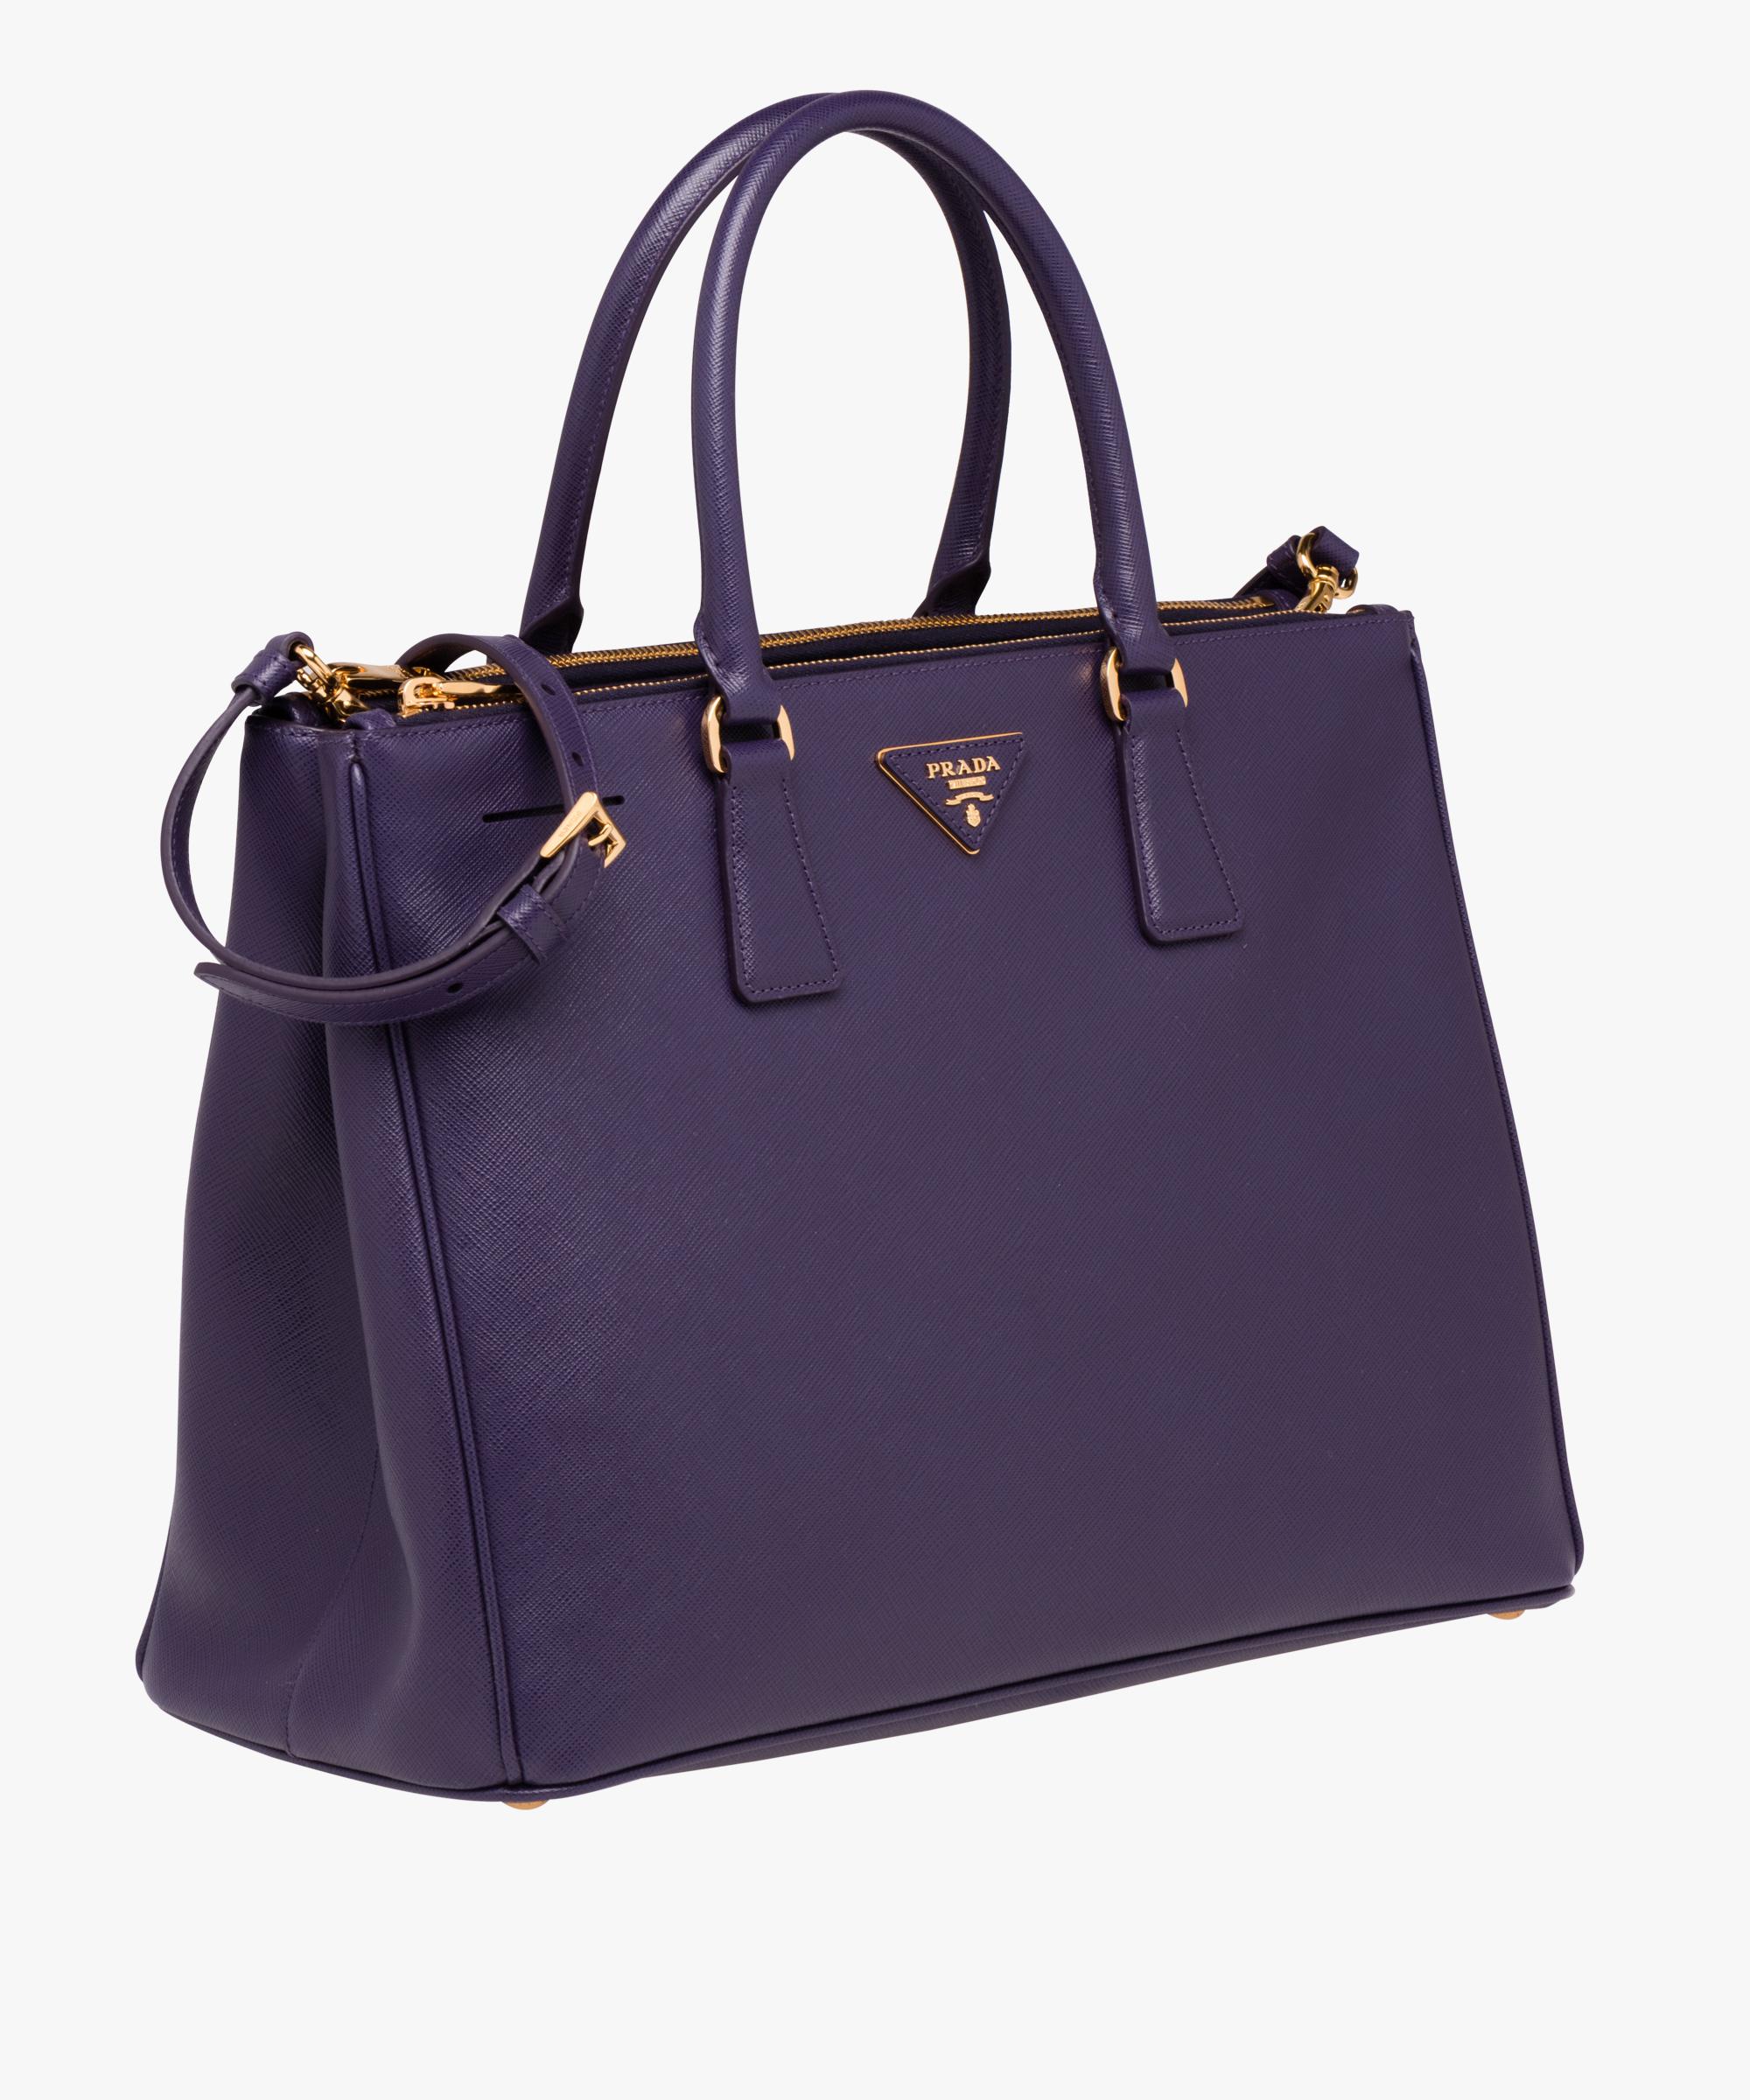 Prada Galleria Saffiano Leather Bag in 